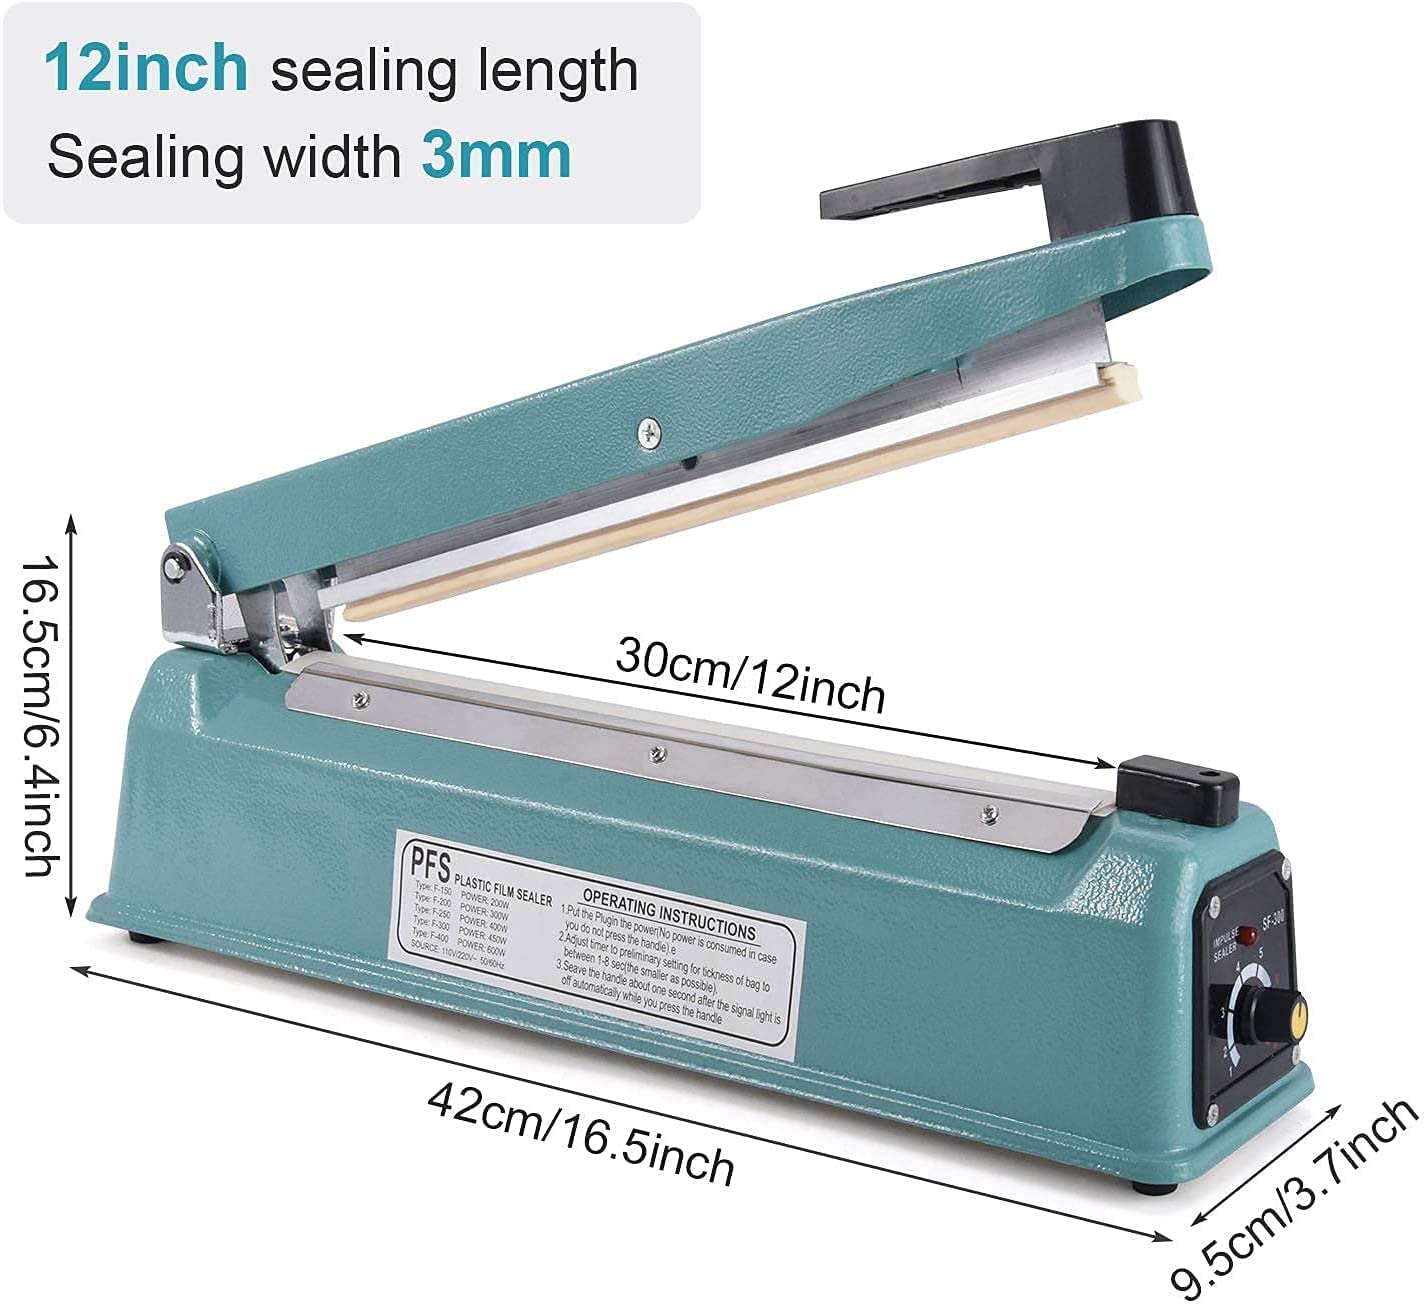 VIO Impulse Bag Sealer, Manual Poly Bag Sealing Machine w/Adjustable Timer Electric Heat Seal Closer (300 mm)